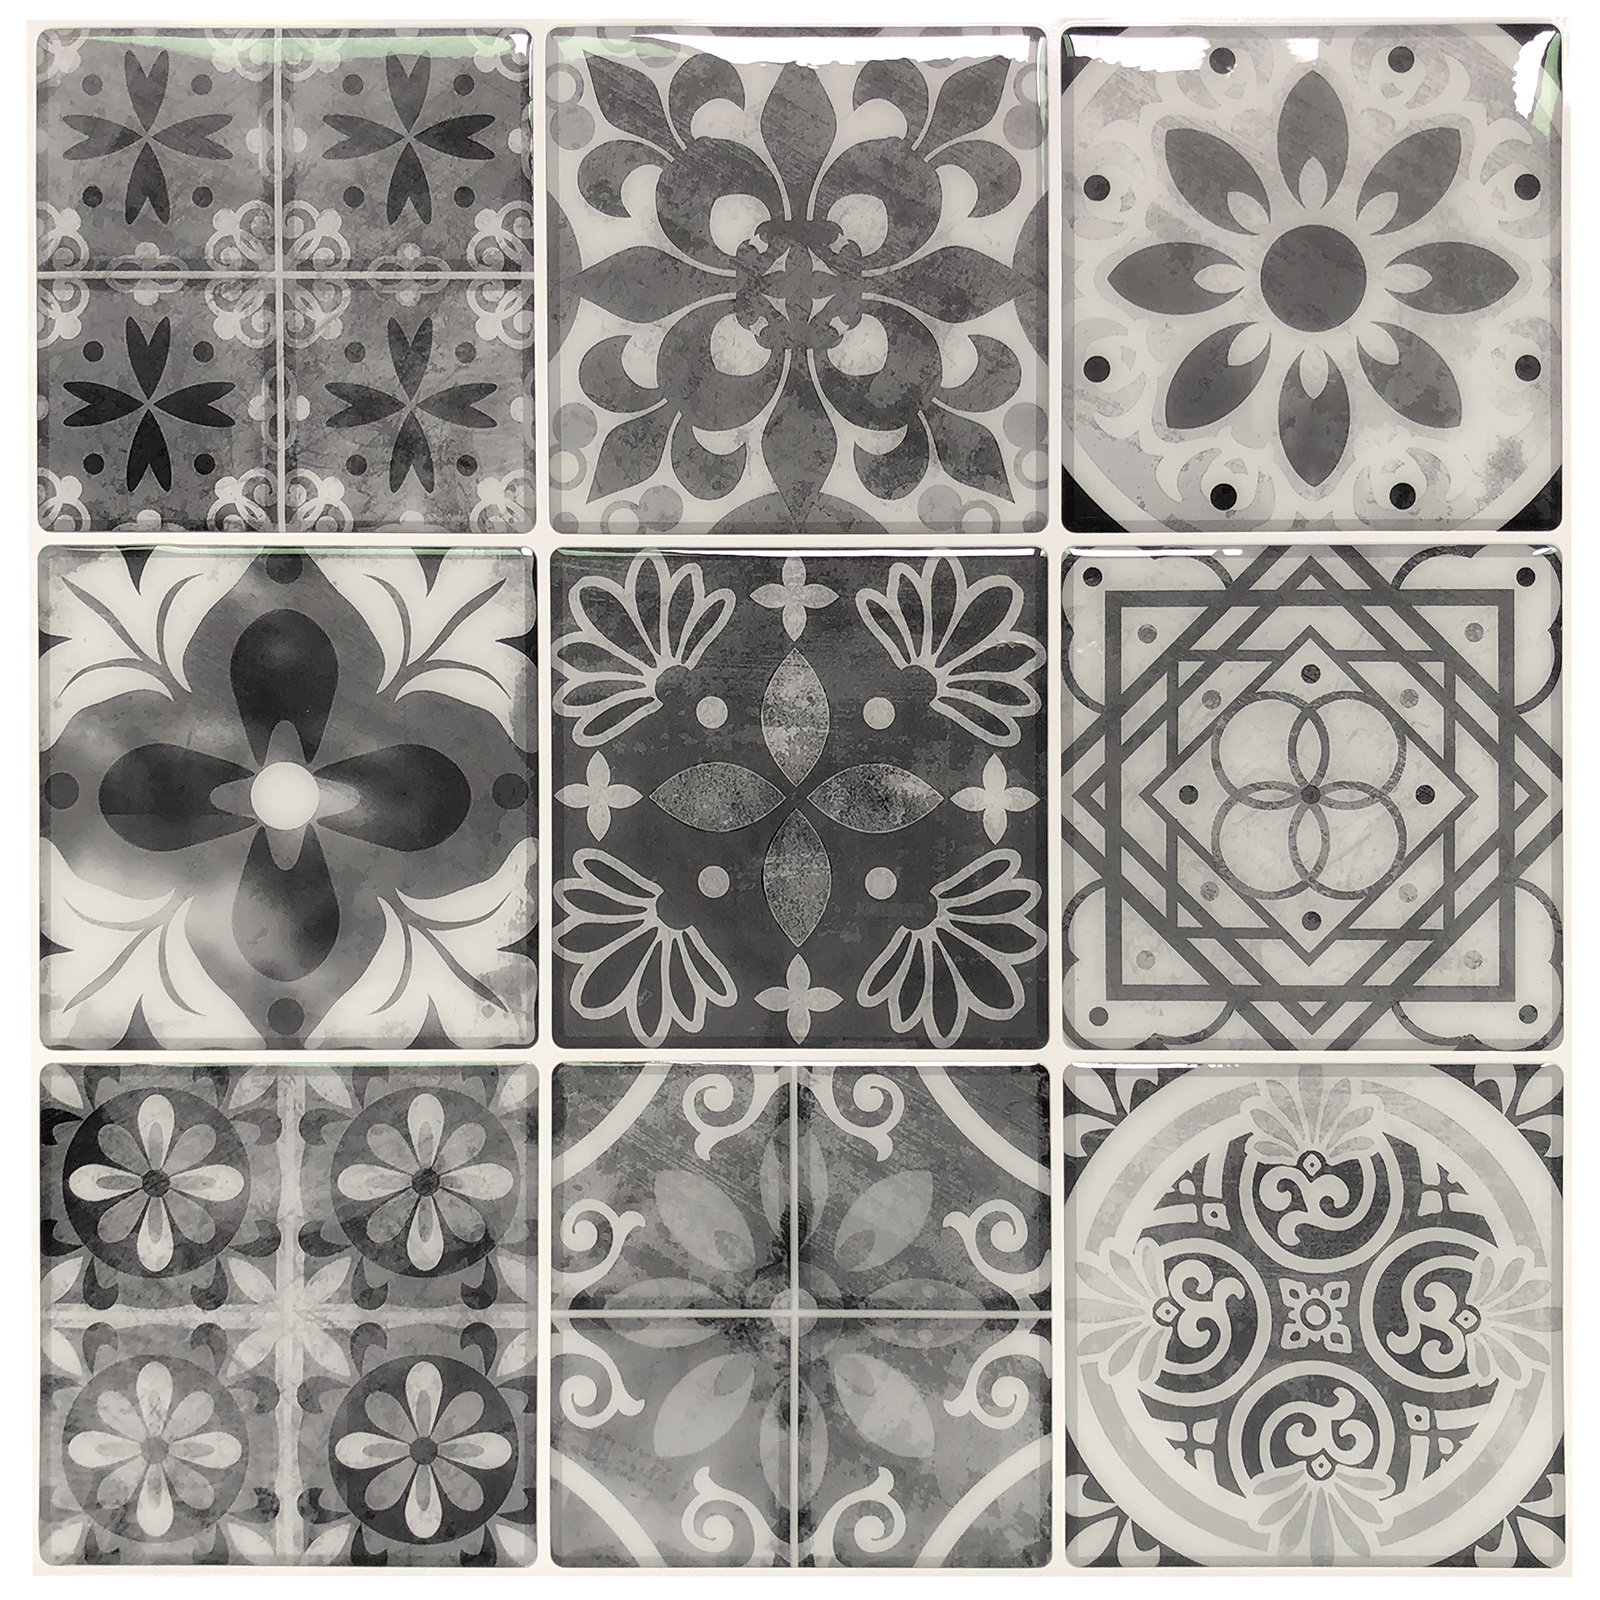 LONGKING Peel and Stick Backsplash Tile Stickers, Gray Talavera Mexican Tiles (10 Sheets)